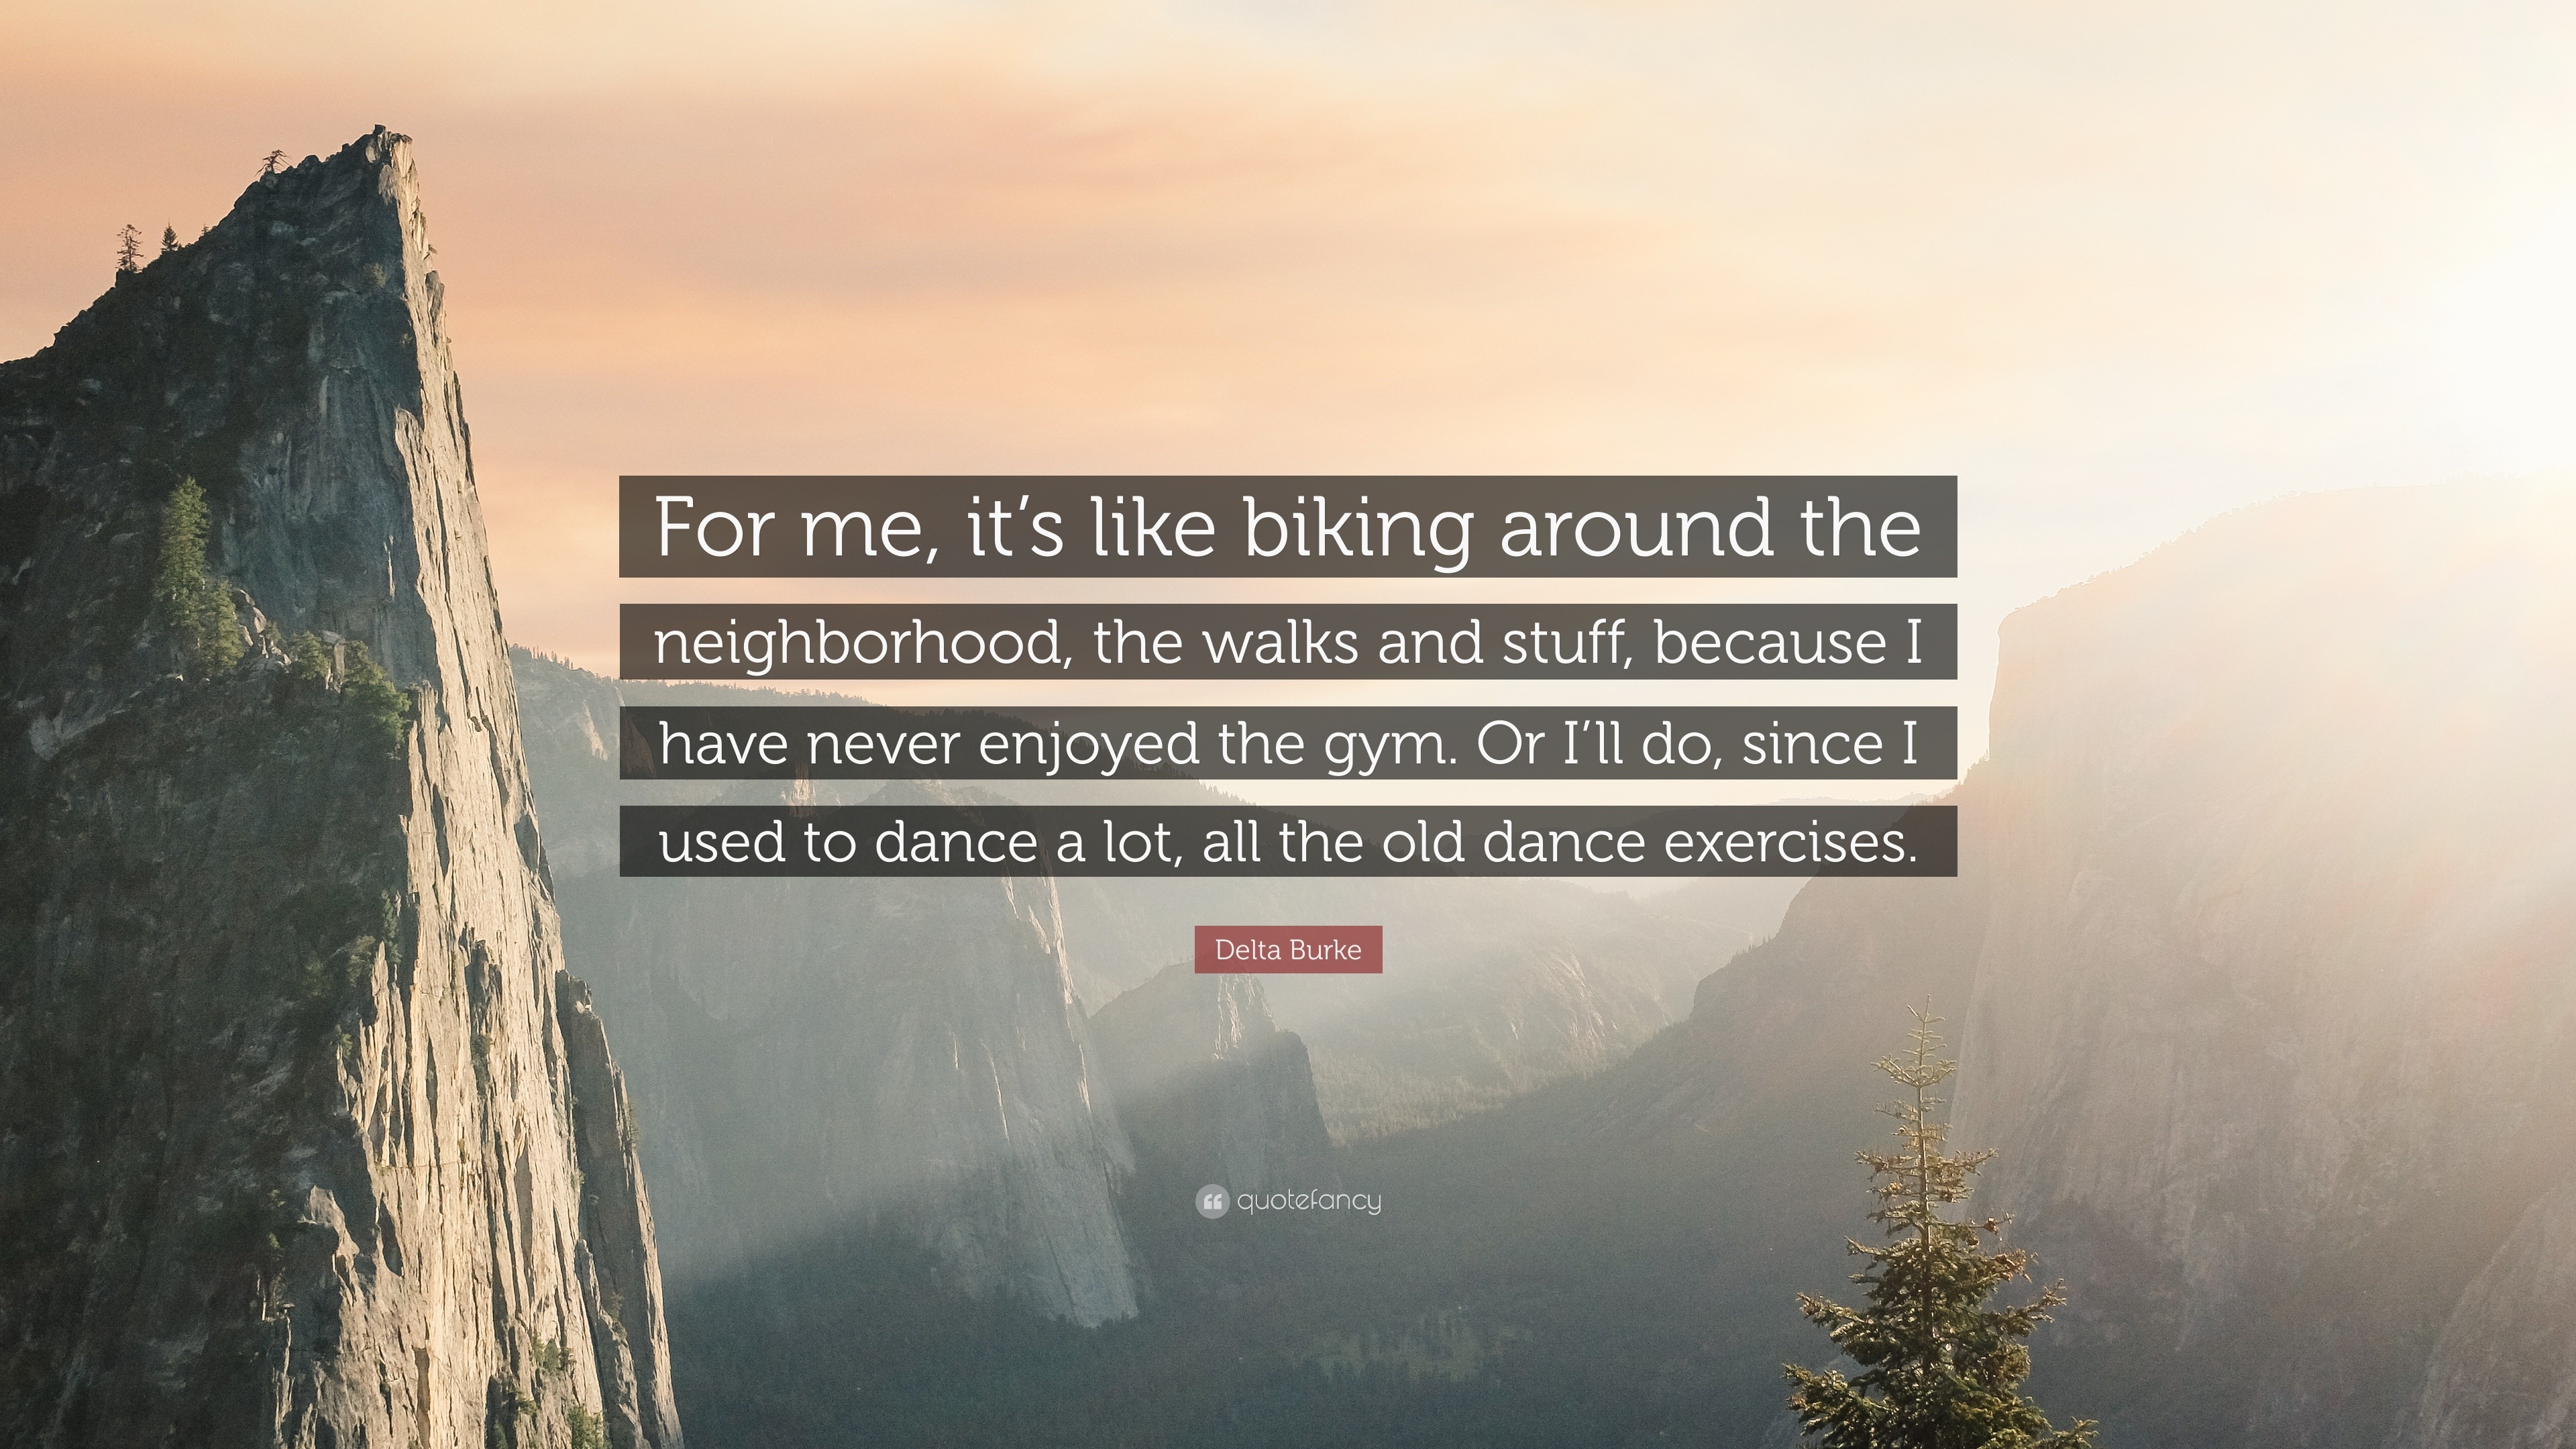 Delta Burke Quote: “For me, it's like biking around the